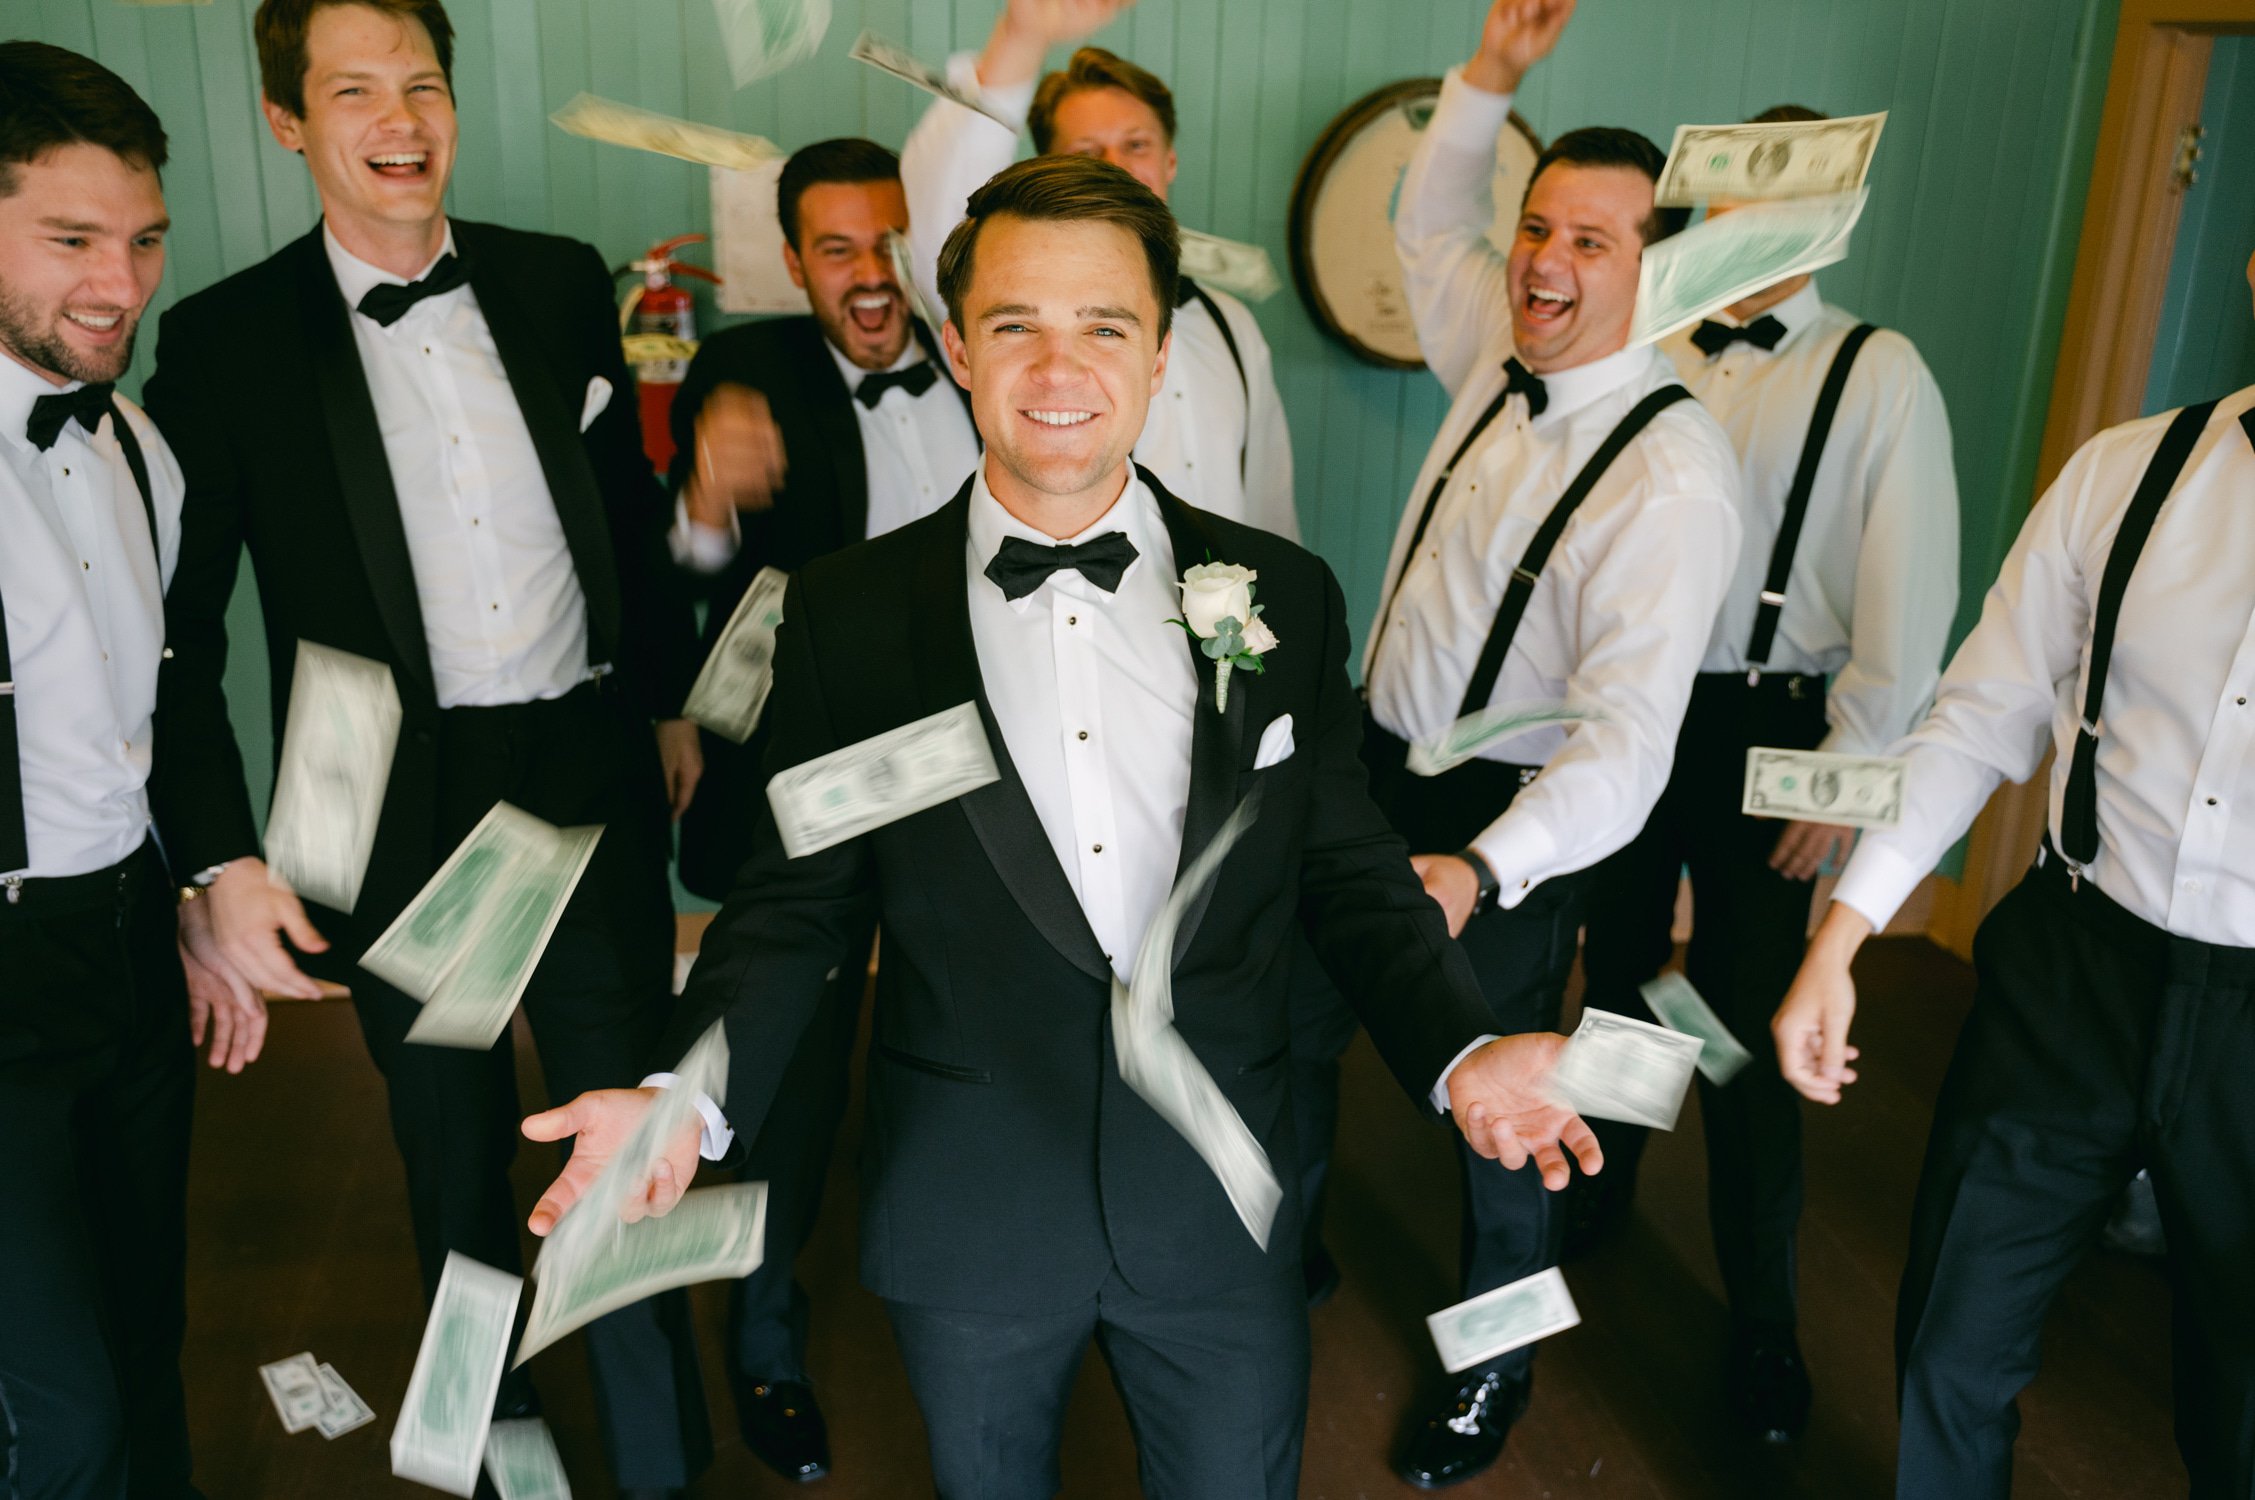 Valhalla Lake Tahoe wedding, photo of groomsmen throwing money to the groom